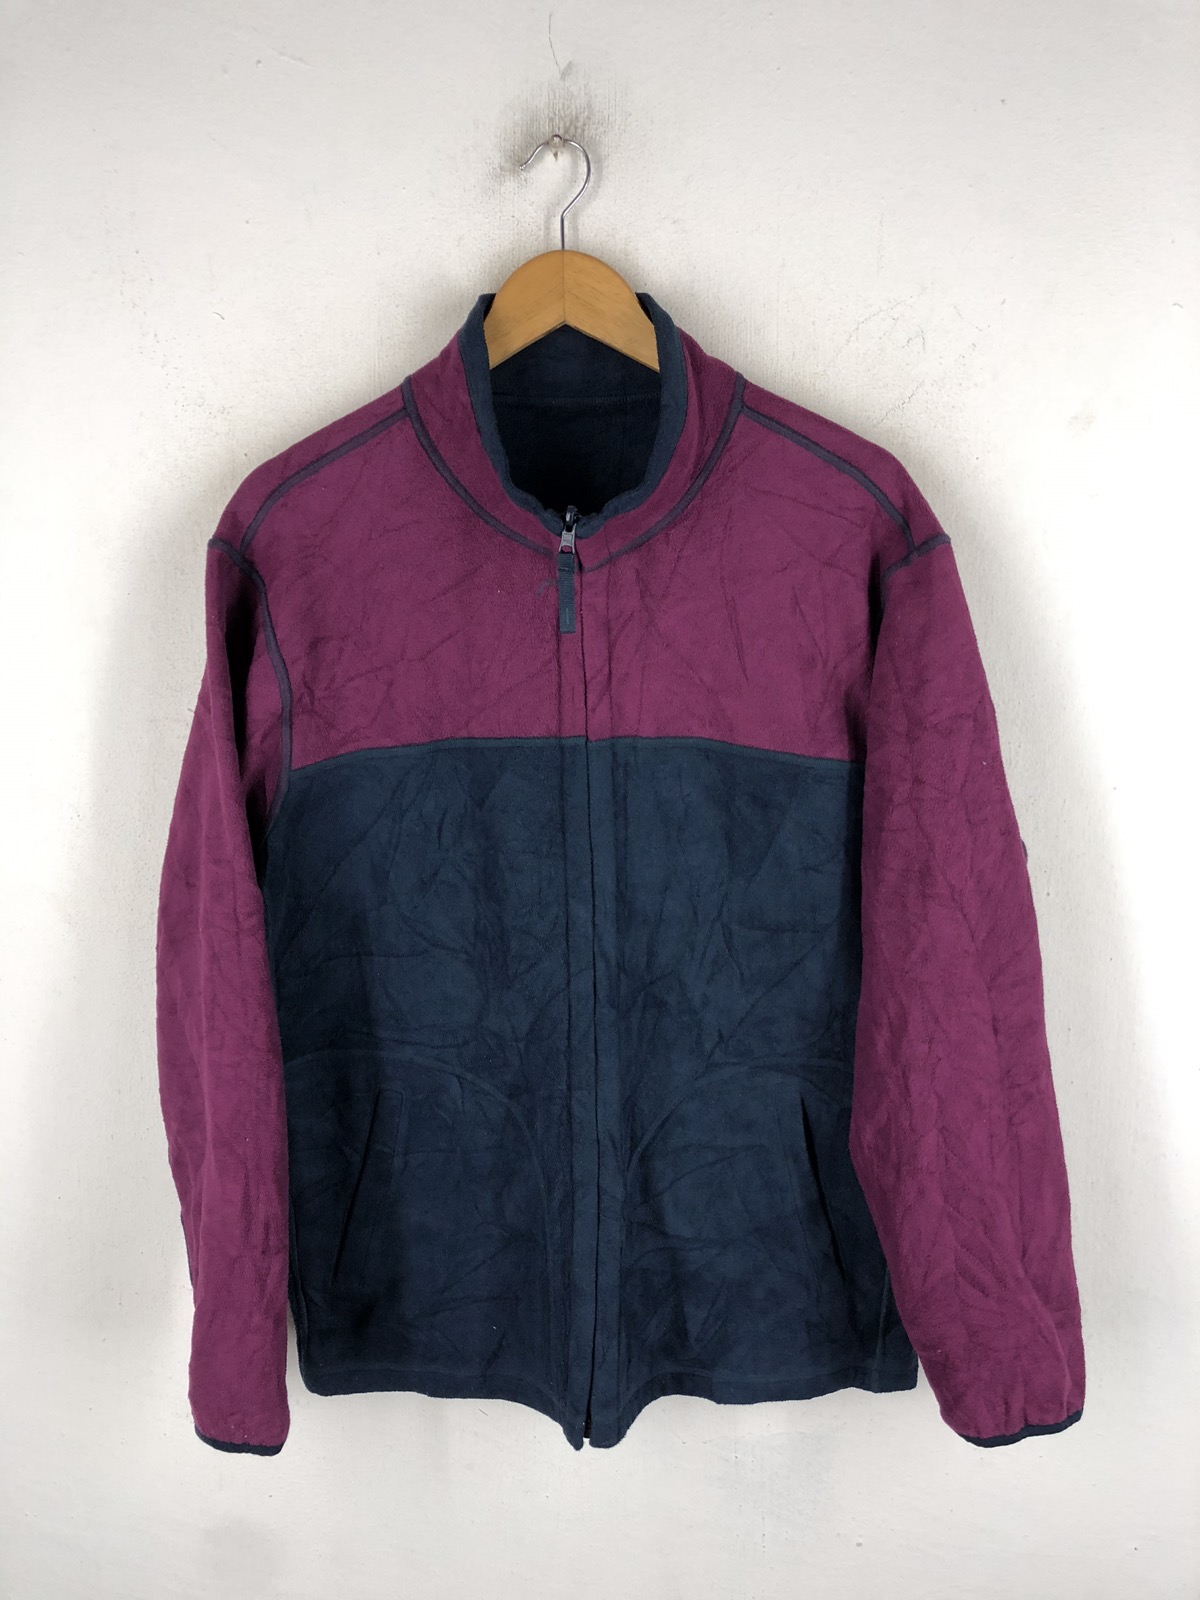 Uniqlo - Two tone color uniqlo fleece jacket - 1